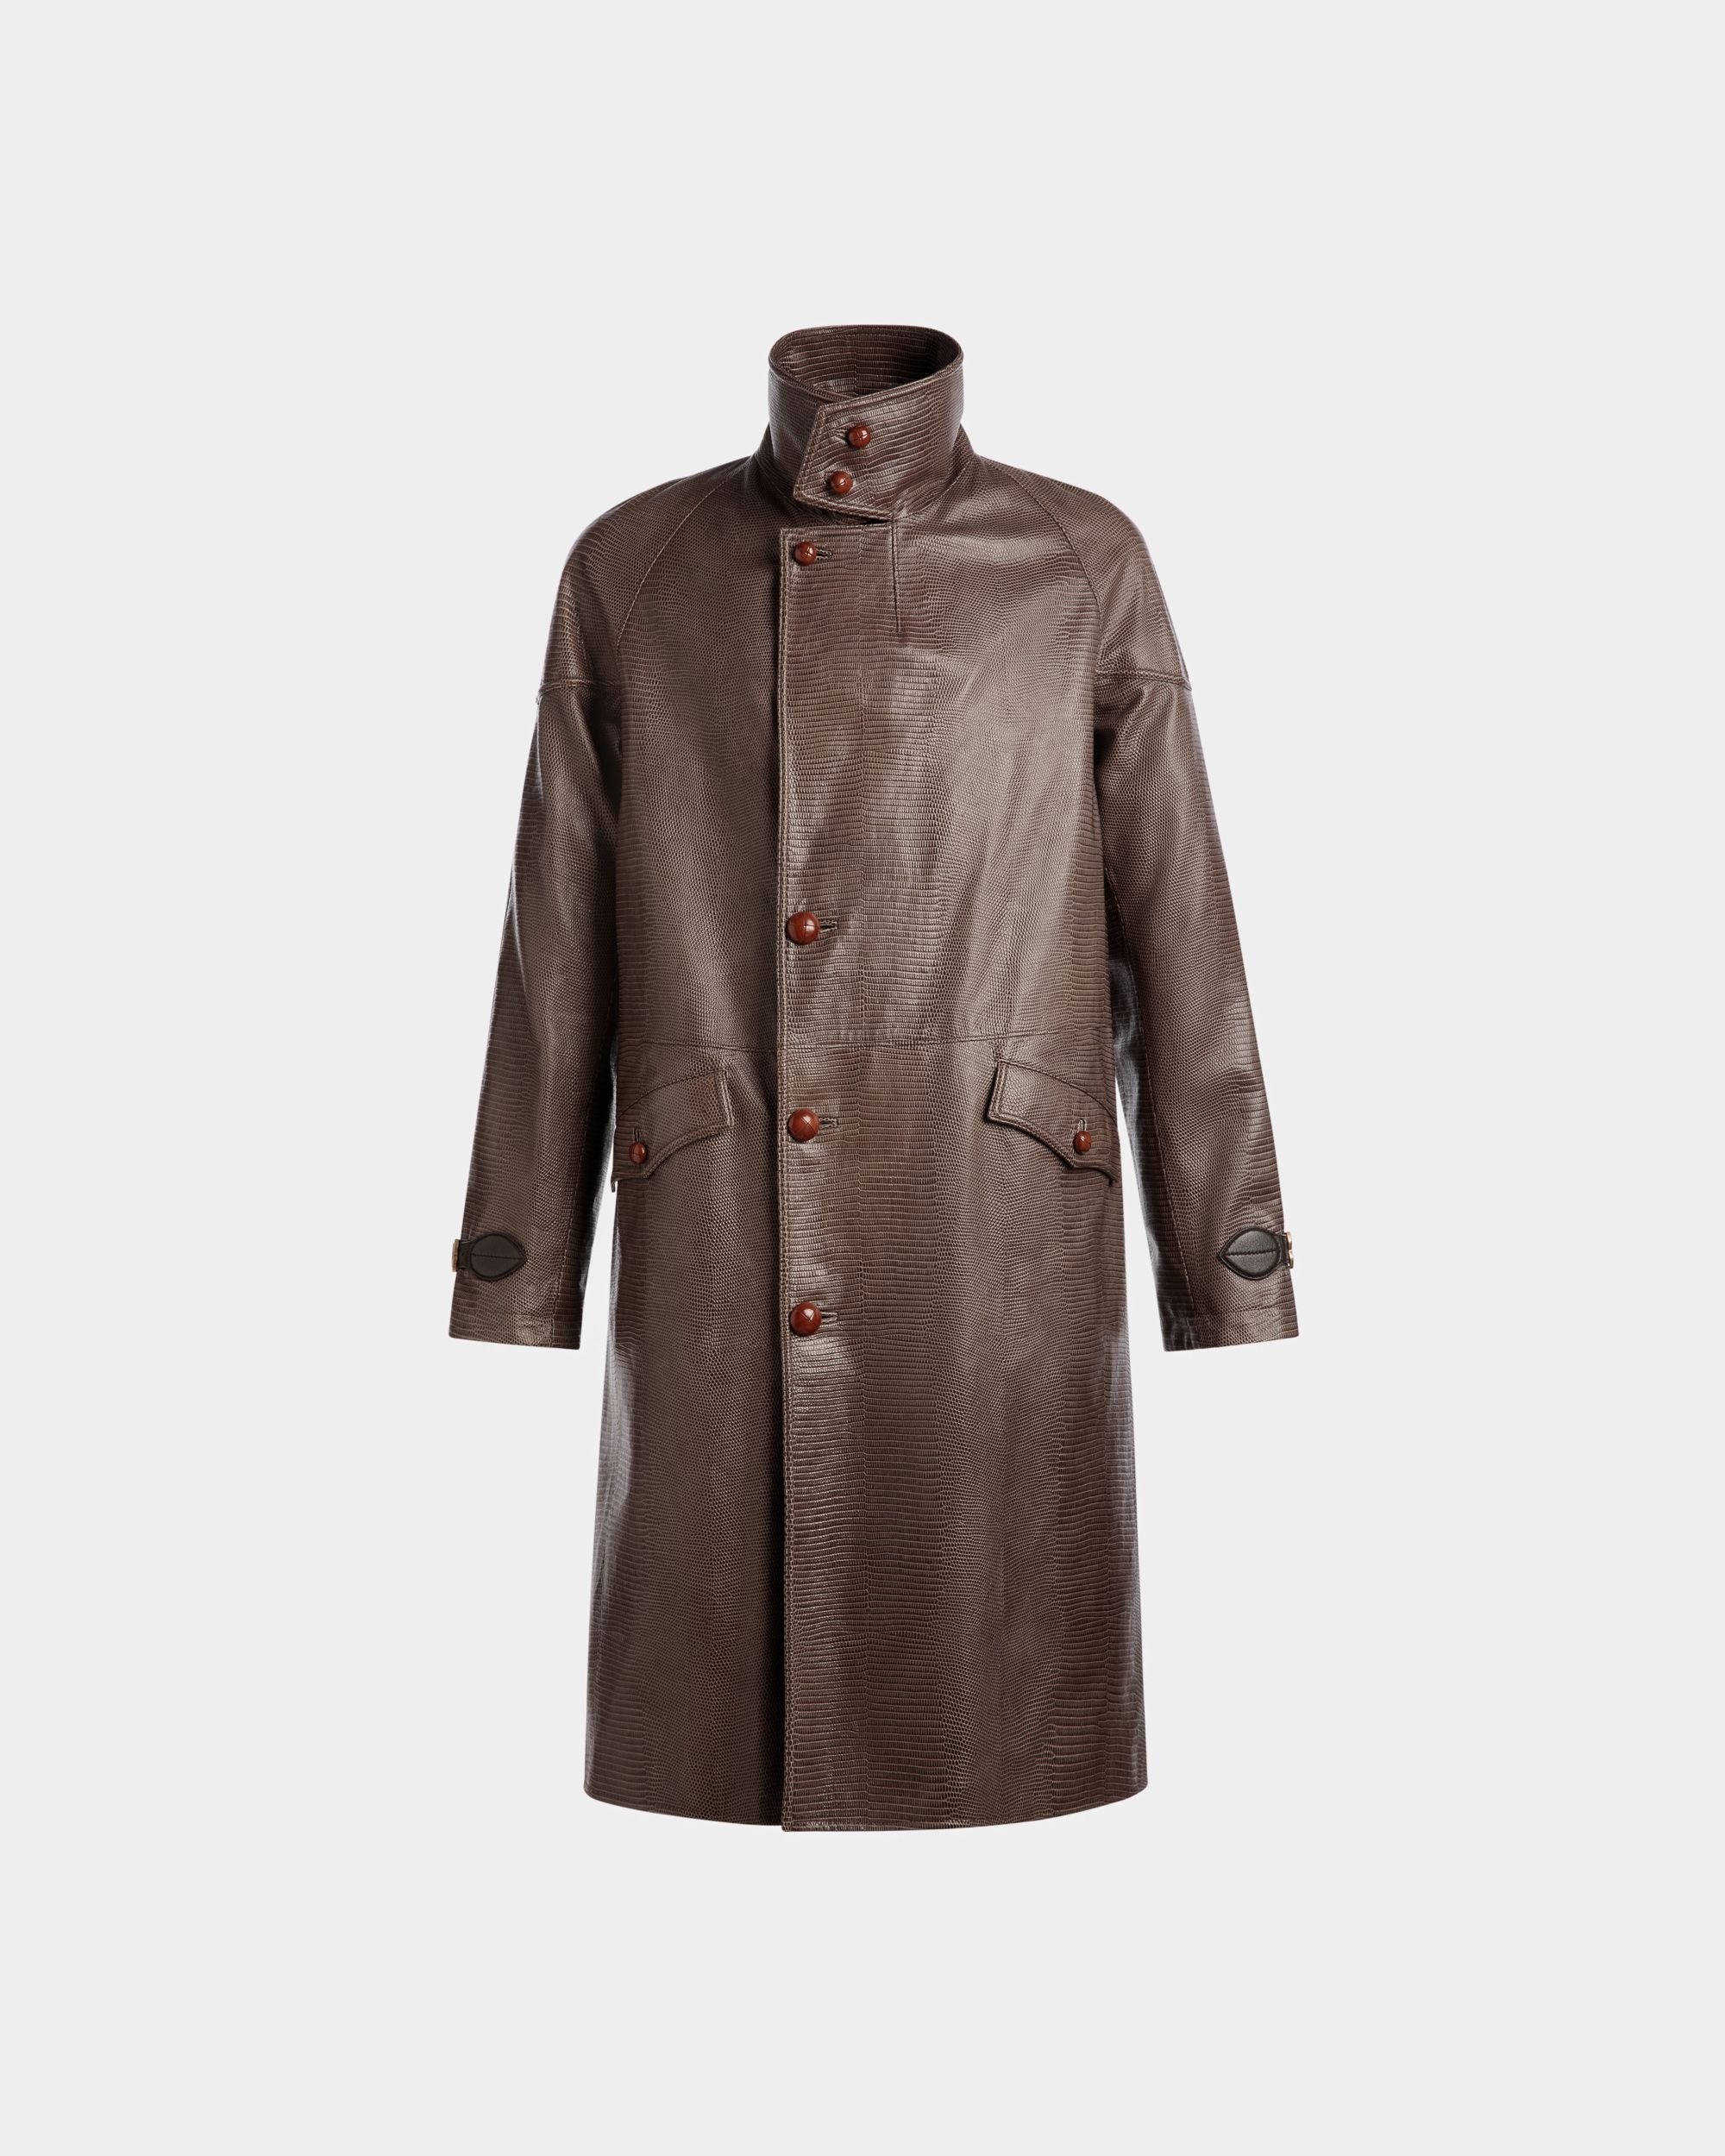 Pea Coat | Men's Coat | Grey Leather | Bally | Still Life Front